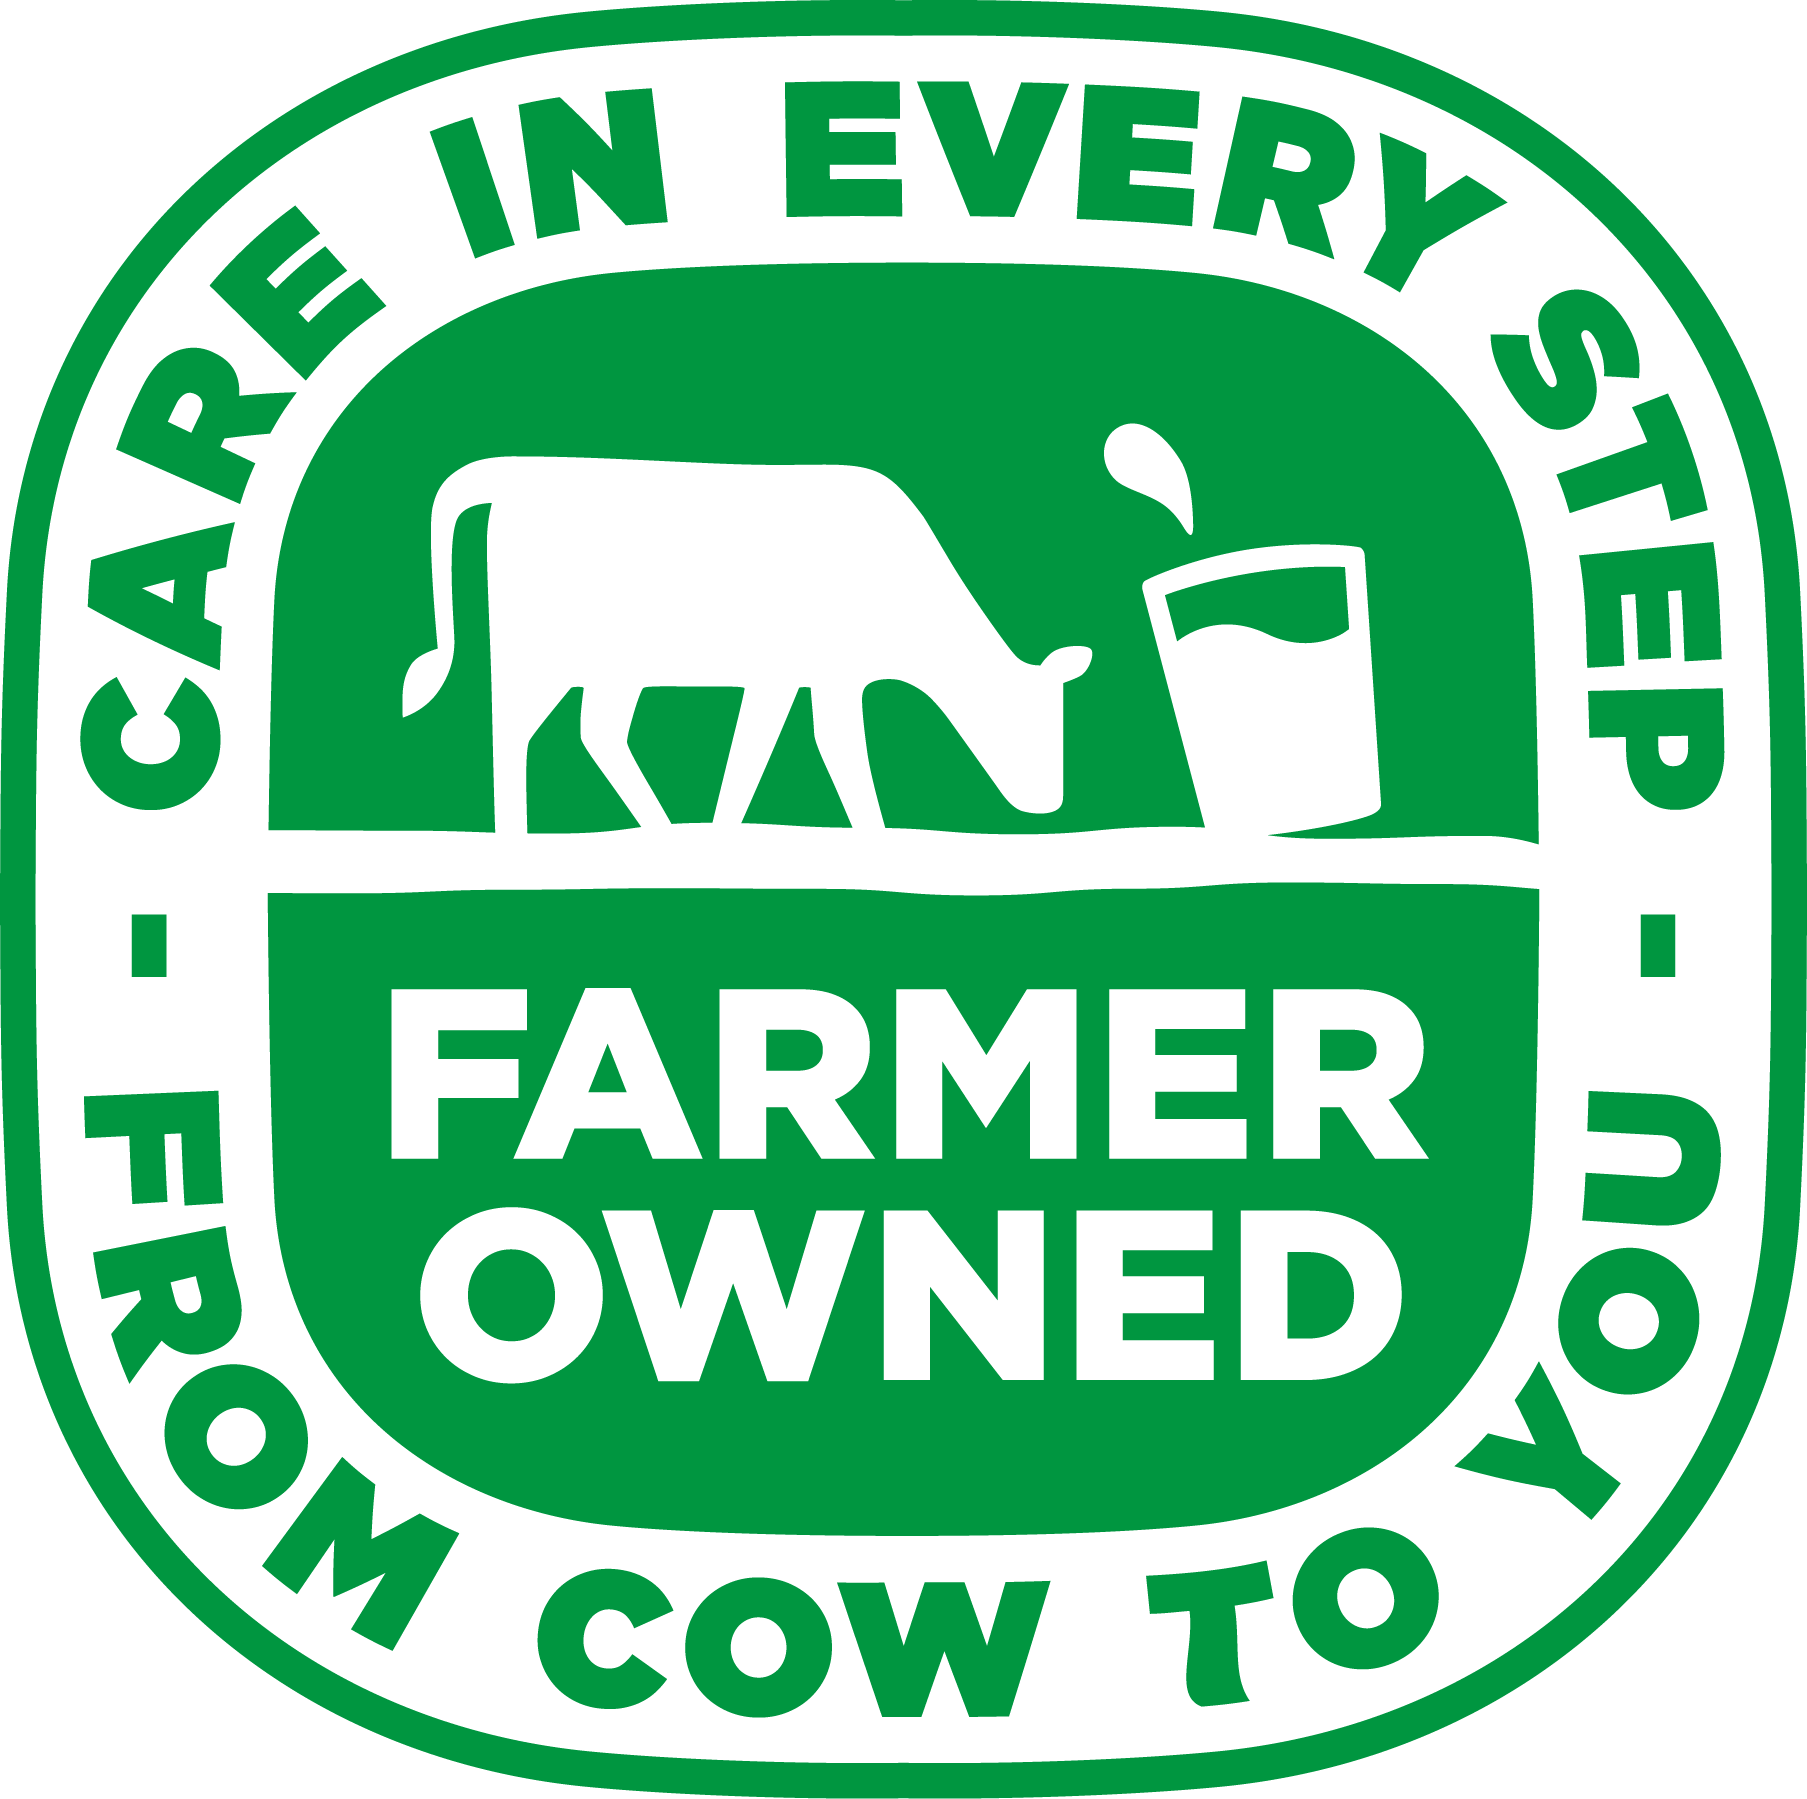 Arla Farmer Owned - 100% owned by farmers (Arla Foods) - Arla Farmer Owned - 100% owned by farmers (Arla Foods)